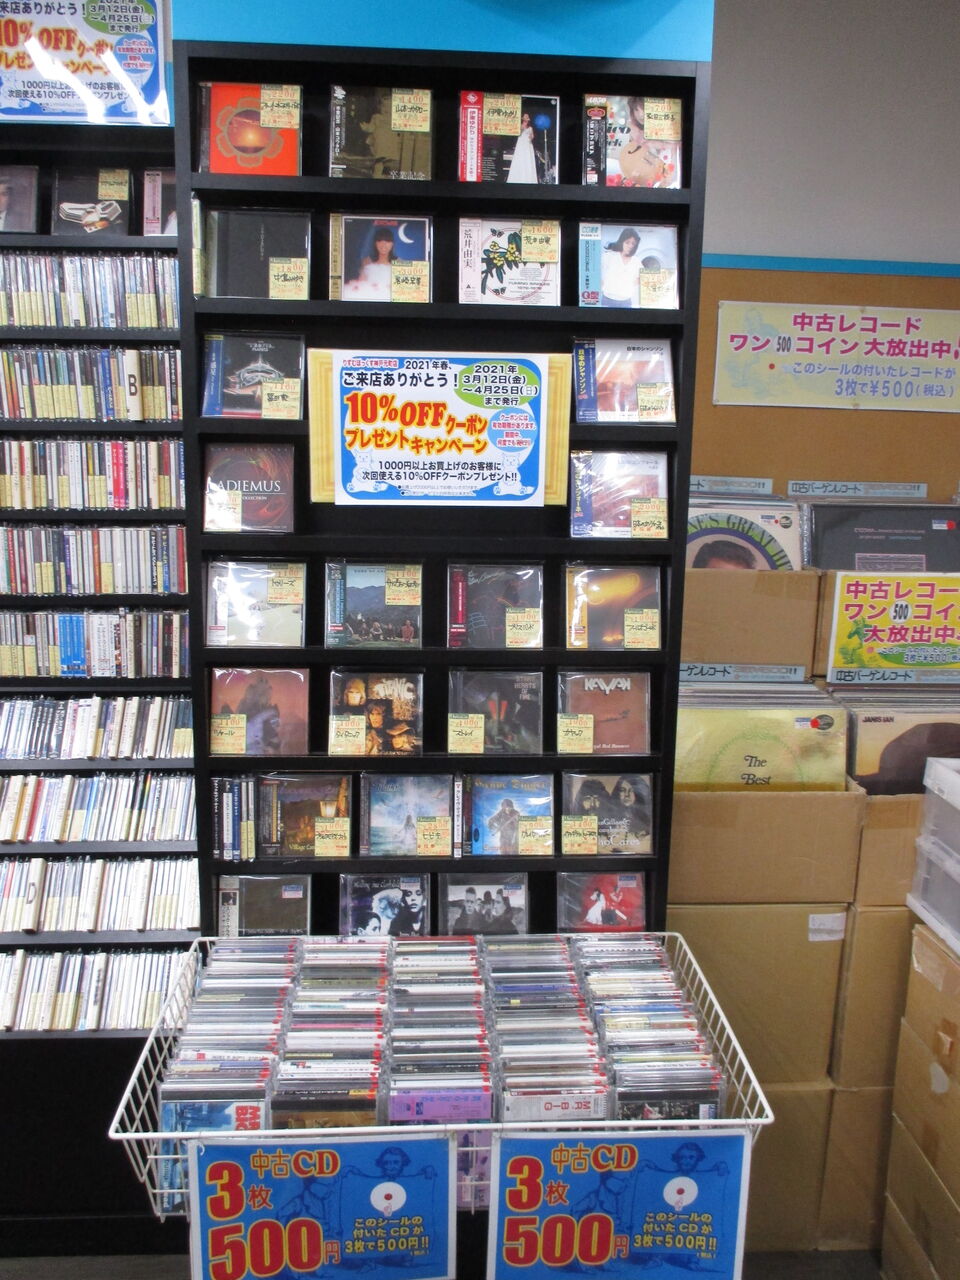 CD : 中古CD・レコード・DVDの店 りずむぼっくす神戸元町店